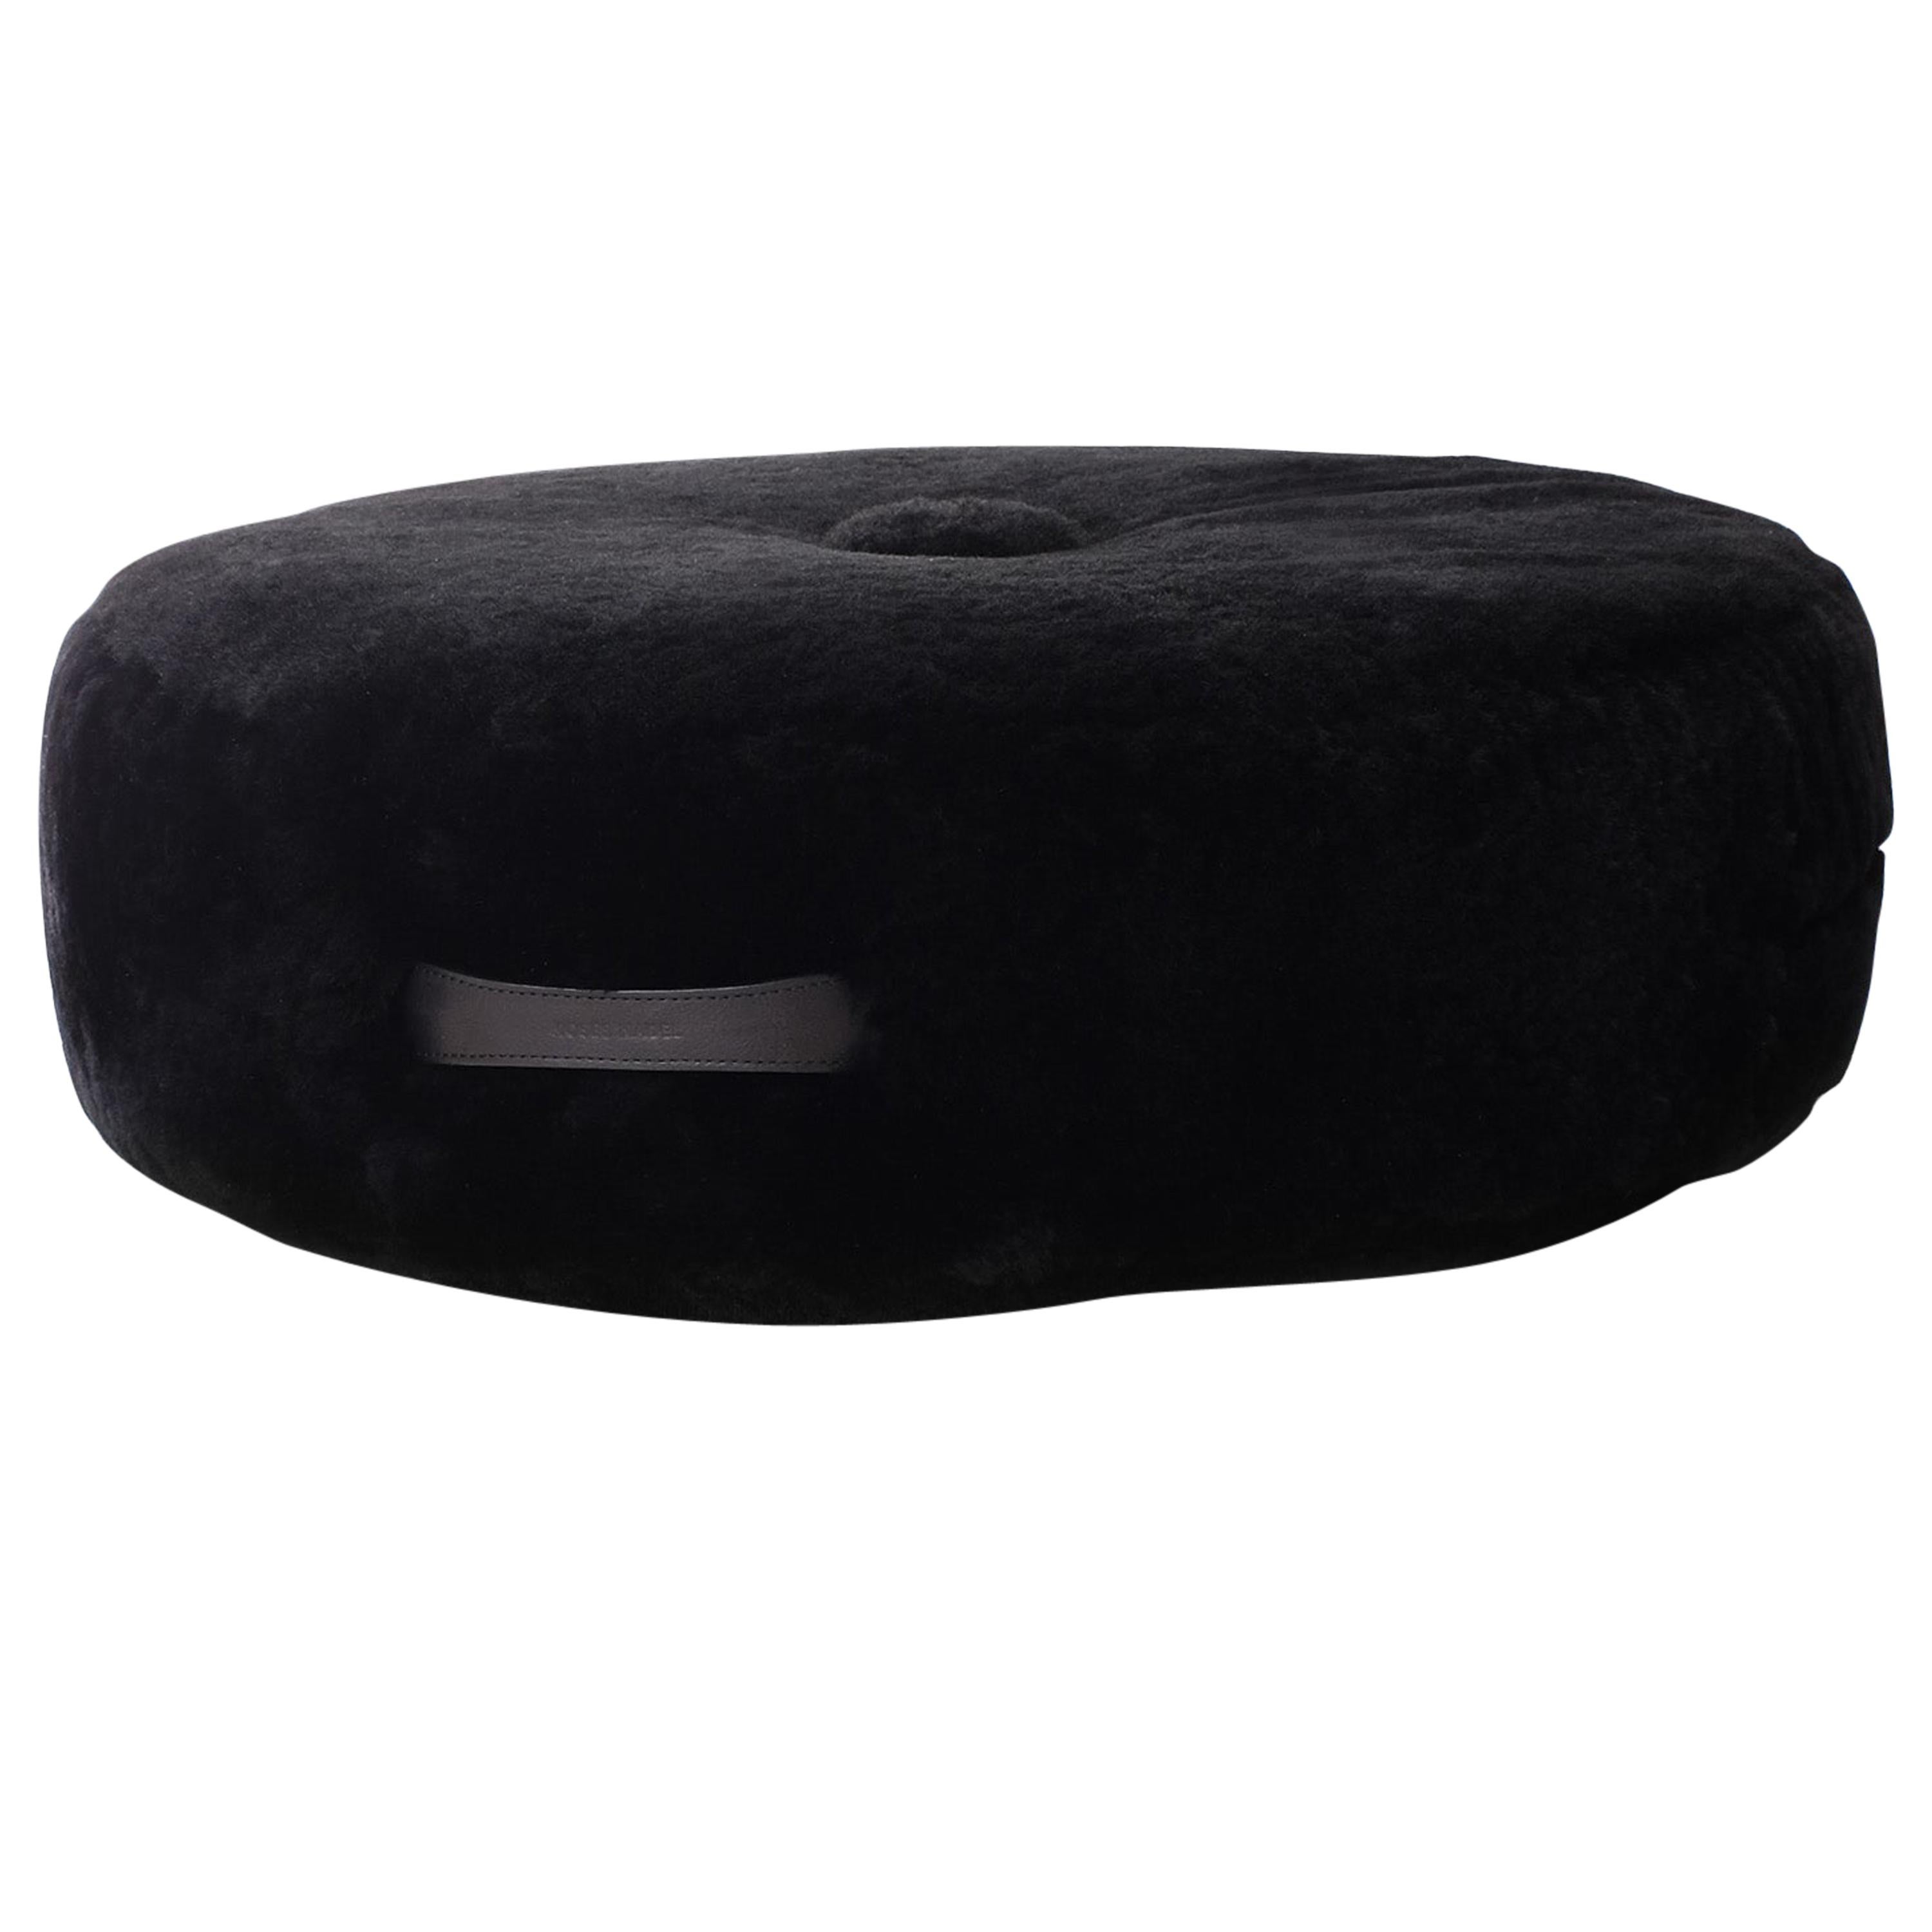 20"Ø x 5" Shearling Black Floor Cushion by Moses Nadel